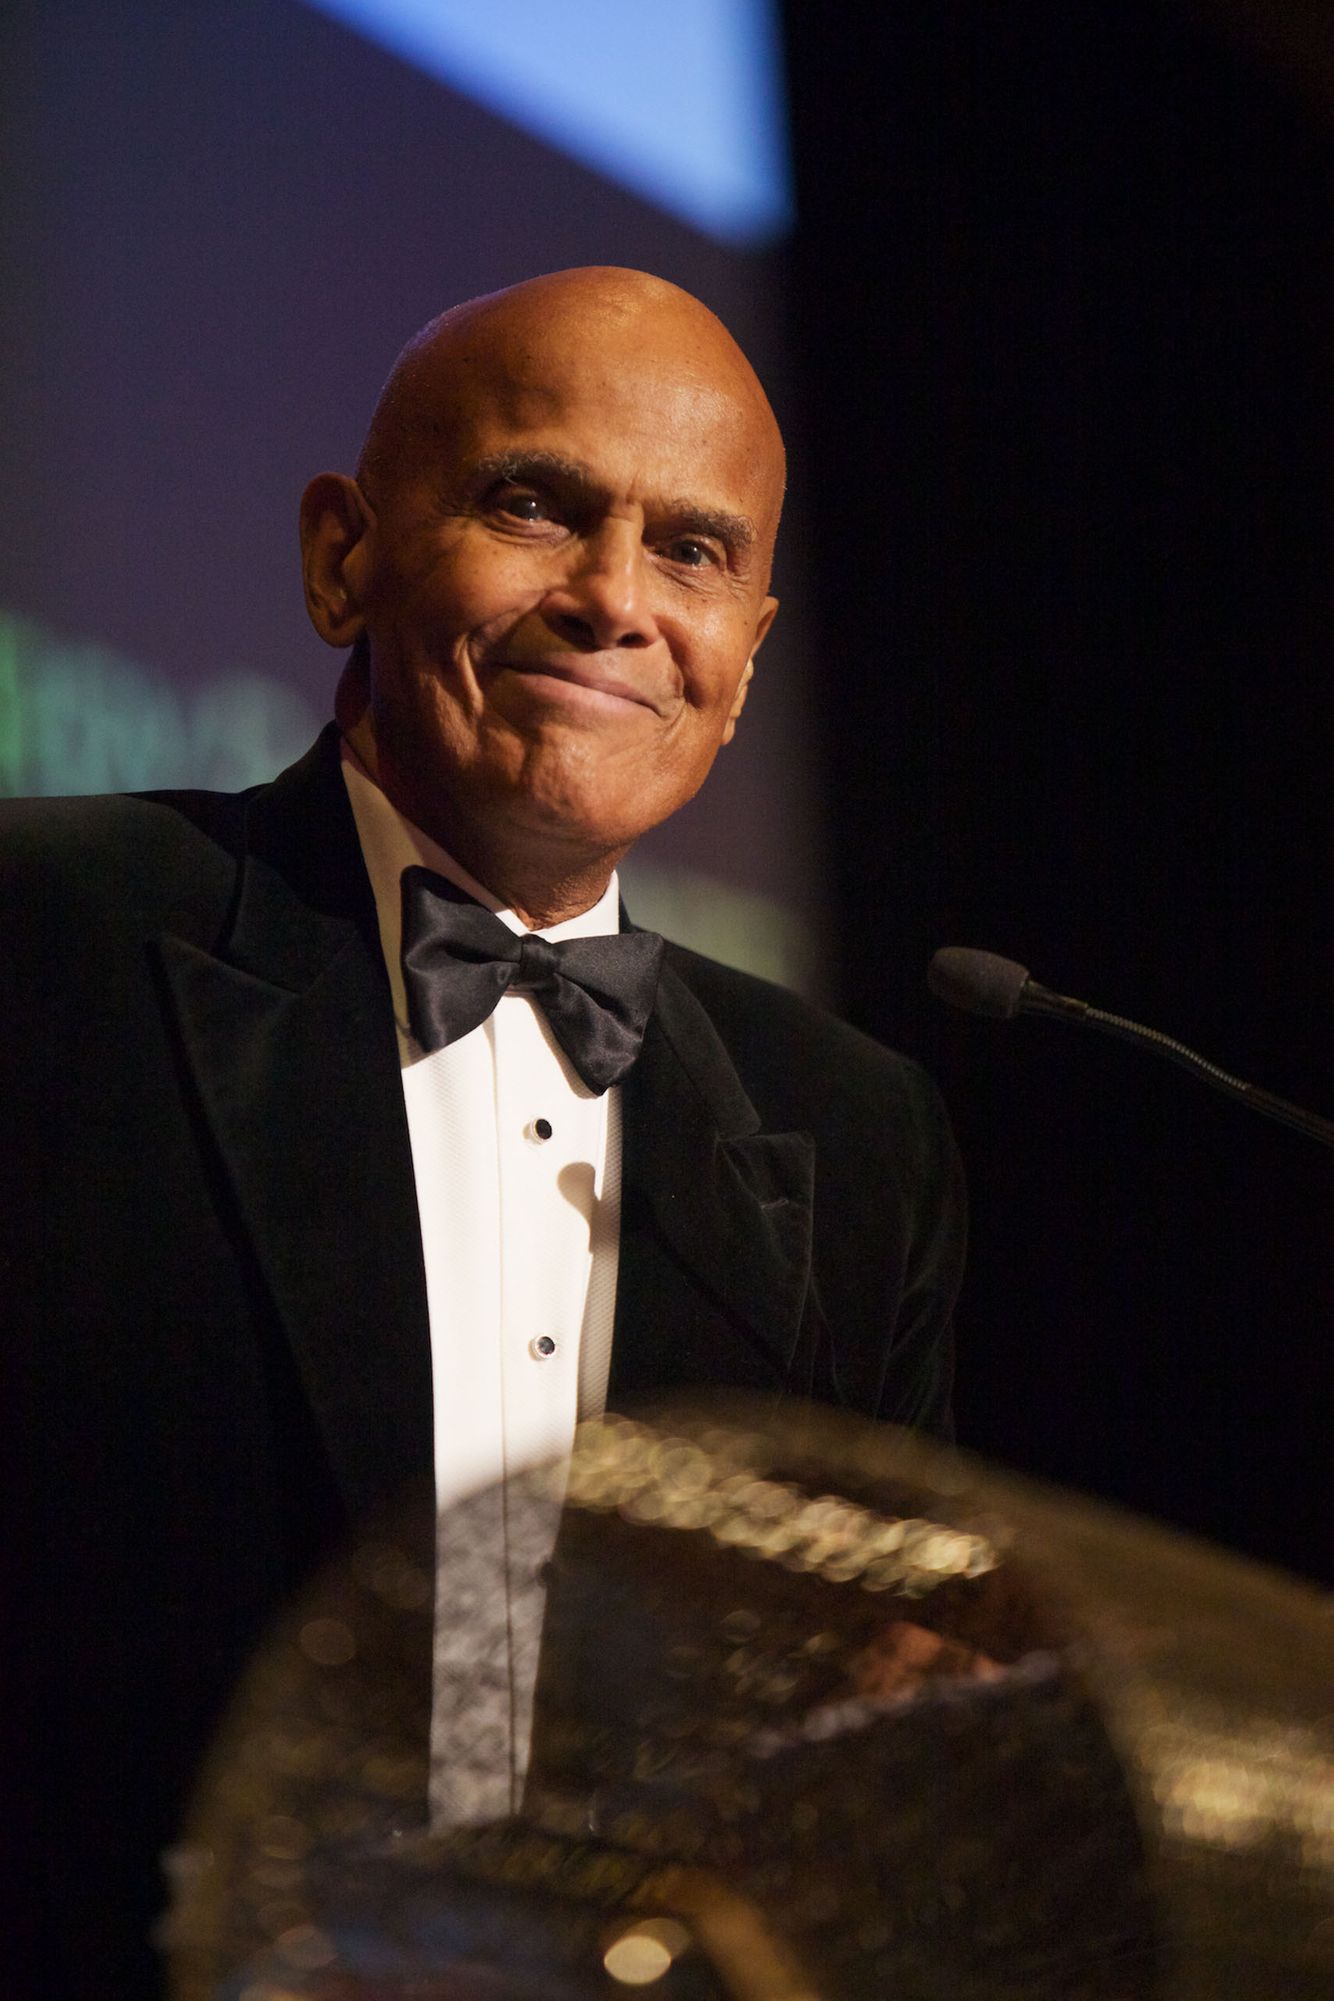 Harry Belafonte By Chicago Celebrity Entertainment Event Photographer Jeff Schear.jpg